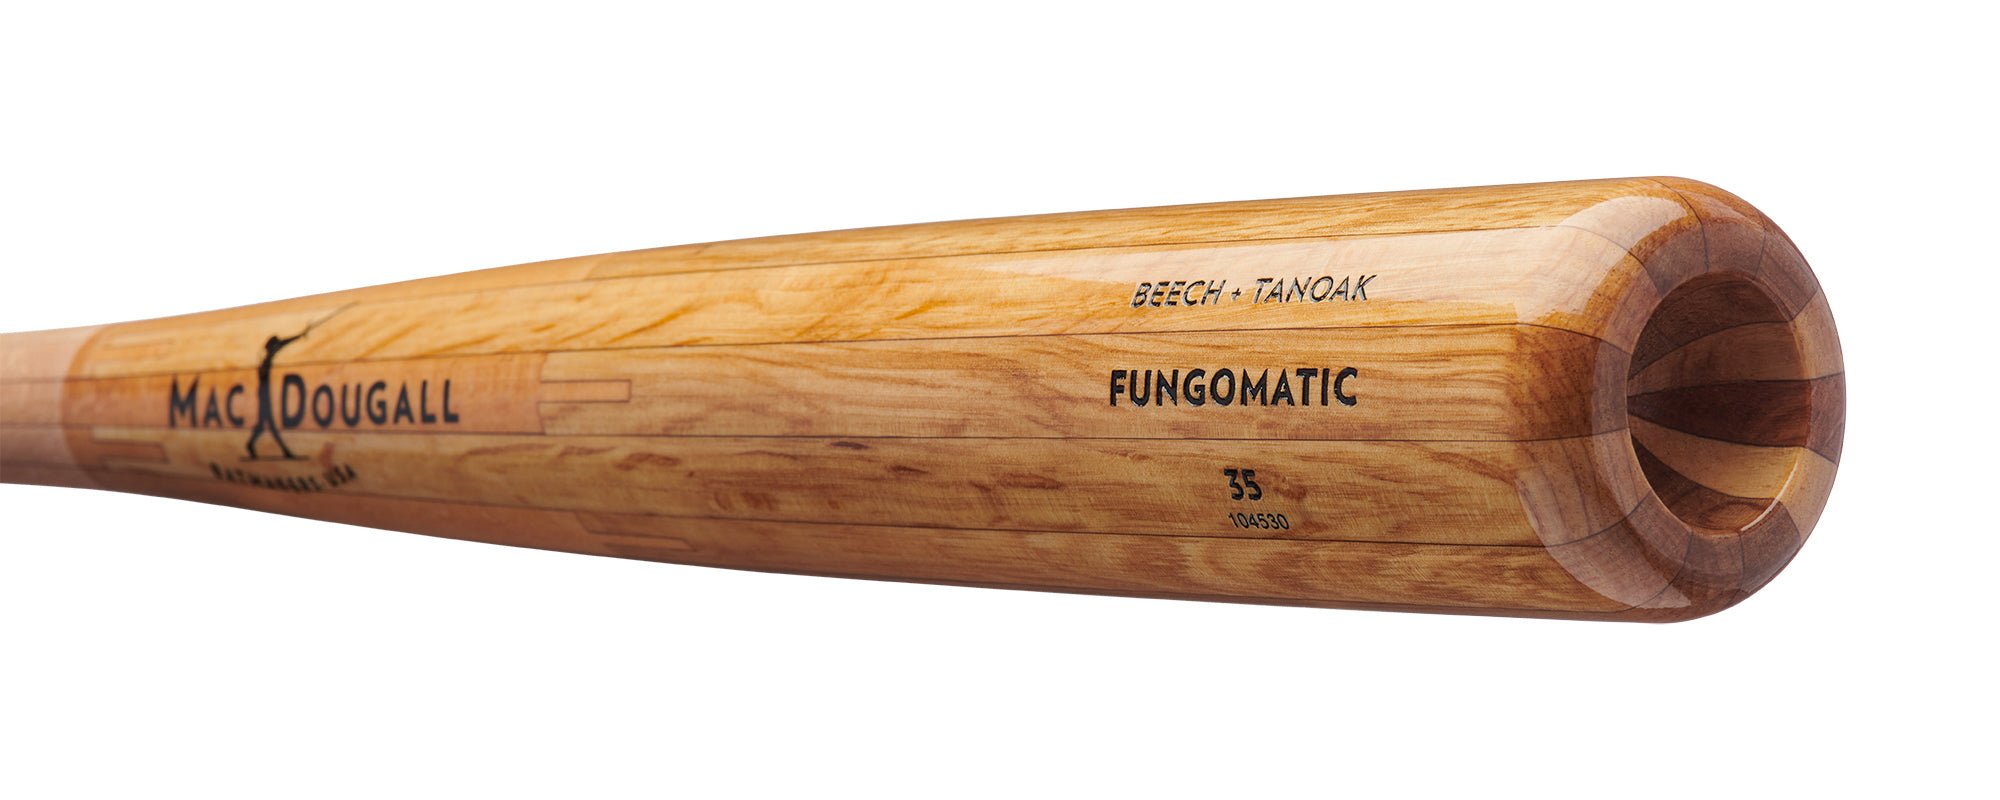 FUNGOMATIC Fungo Bat - MacDougall Bats